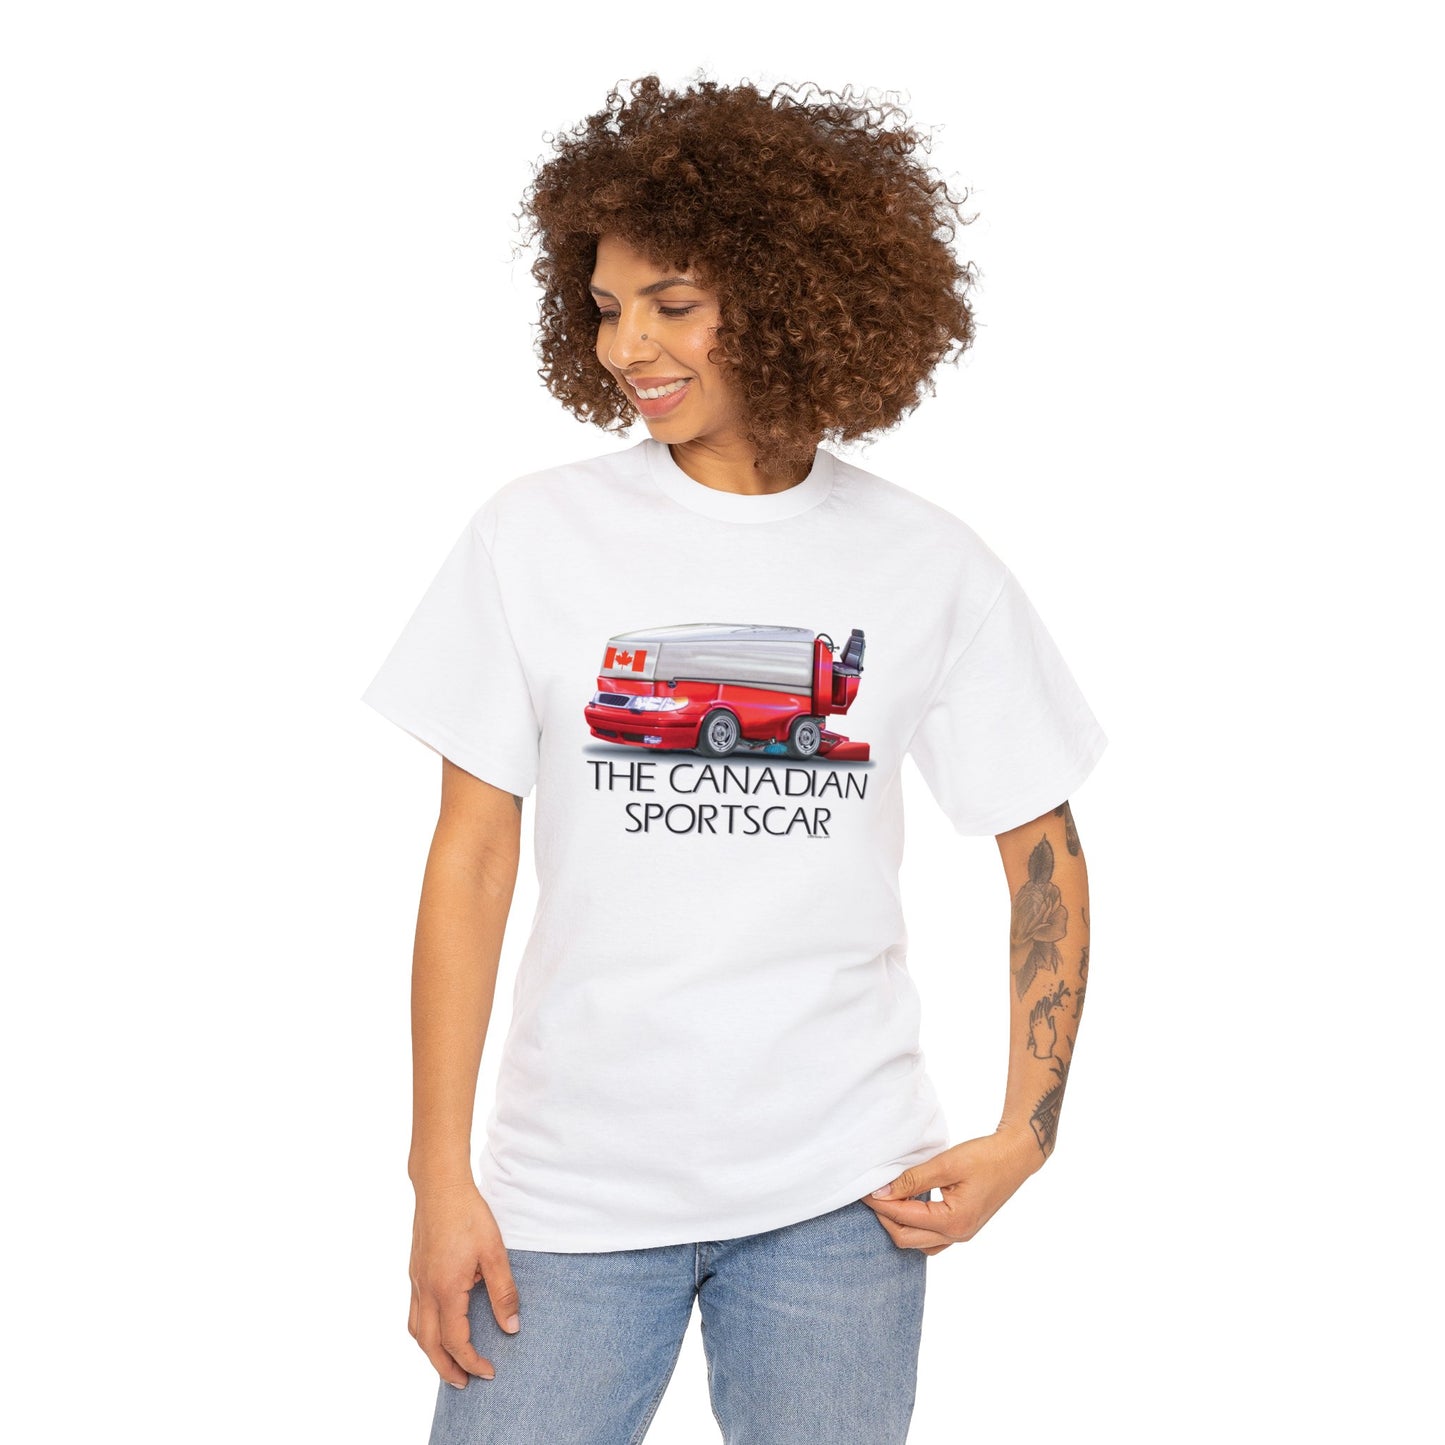 The Canadian Sportscar is an Ice Resurfacing Machine for the Hockey Rink, Fun design, Canada Hockey Parody Tee Shirt Design